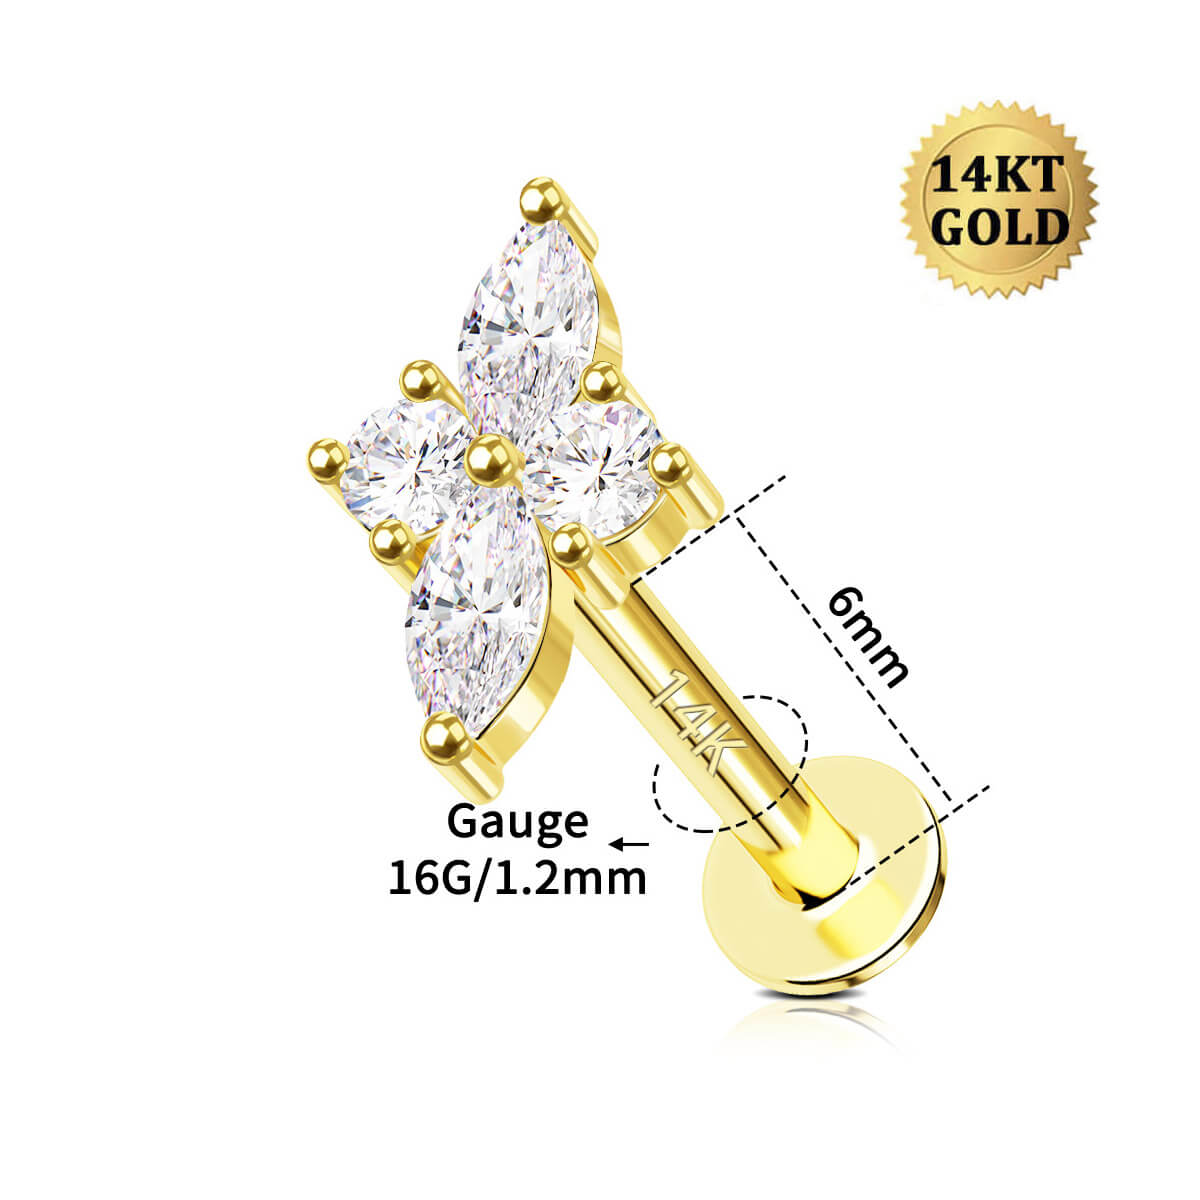 16g 14k gold cartilage earrings